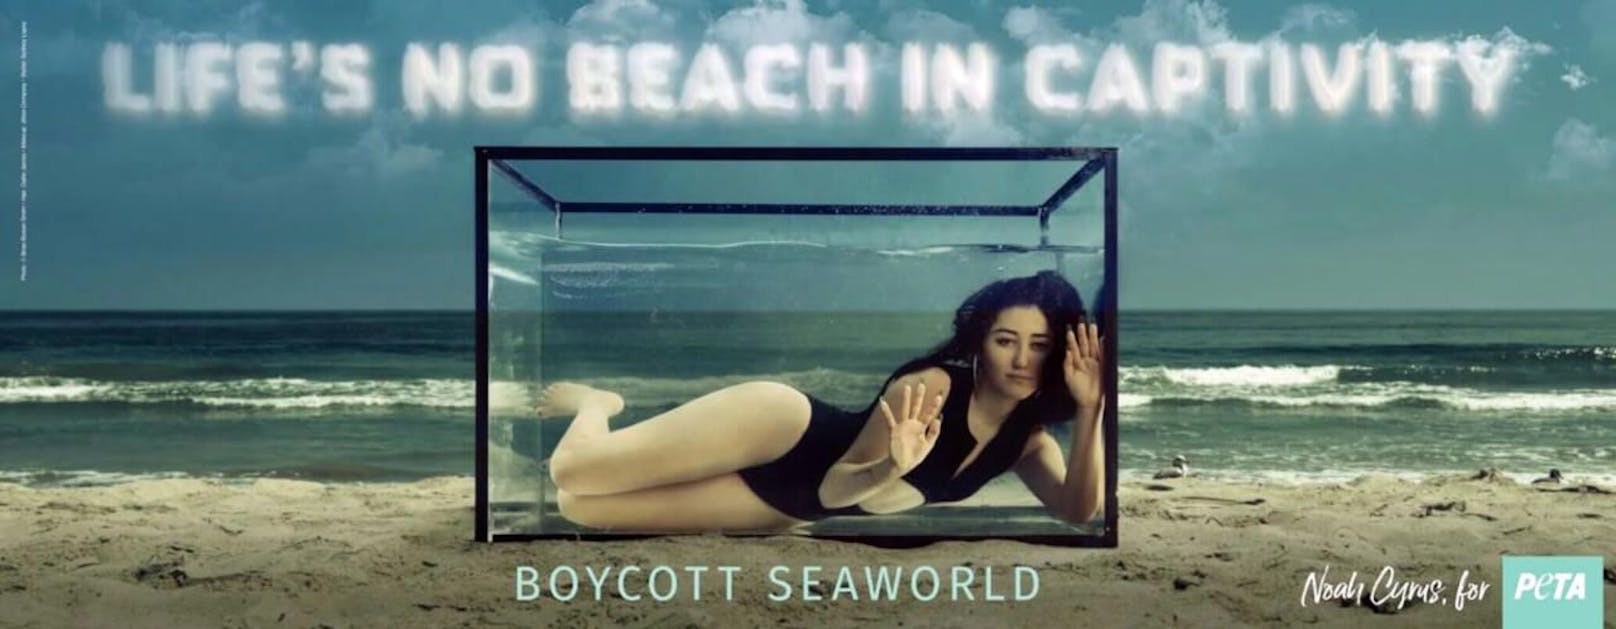 Noah Cyrus für PETA Boycott Seaworld